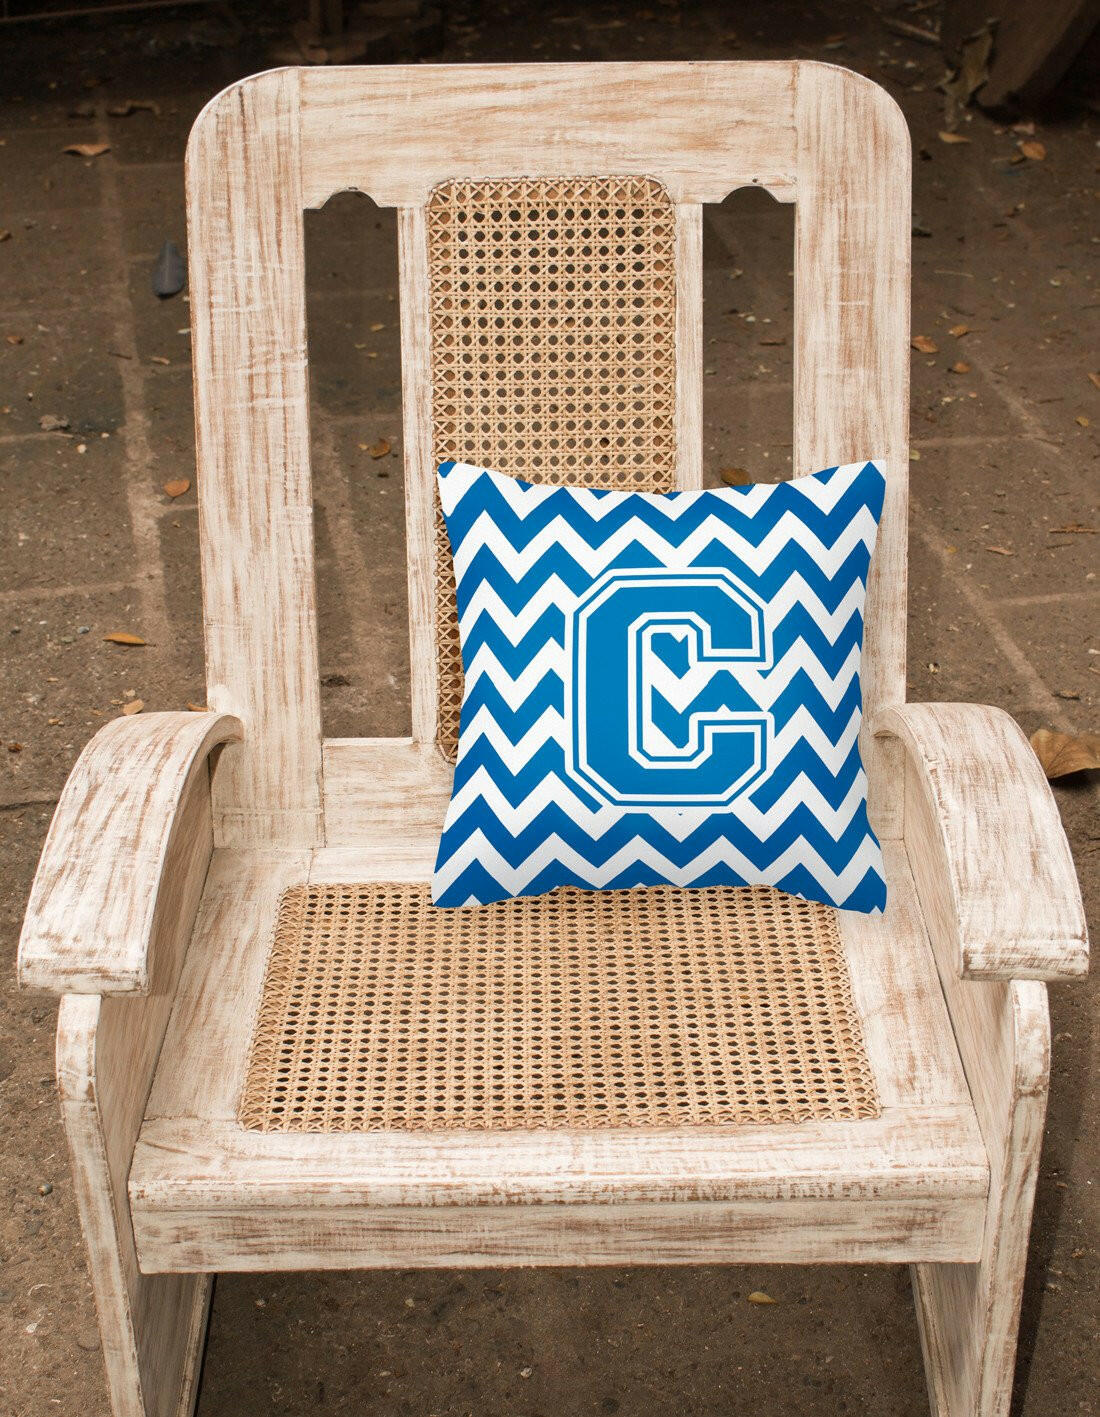 Letter C Chevron Blue and White Fabric Decorative Pillow CJ1056-CPW1414 by Caroline's Treasures